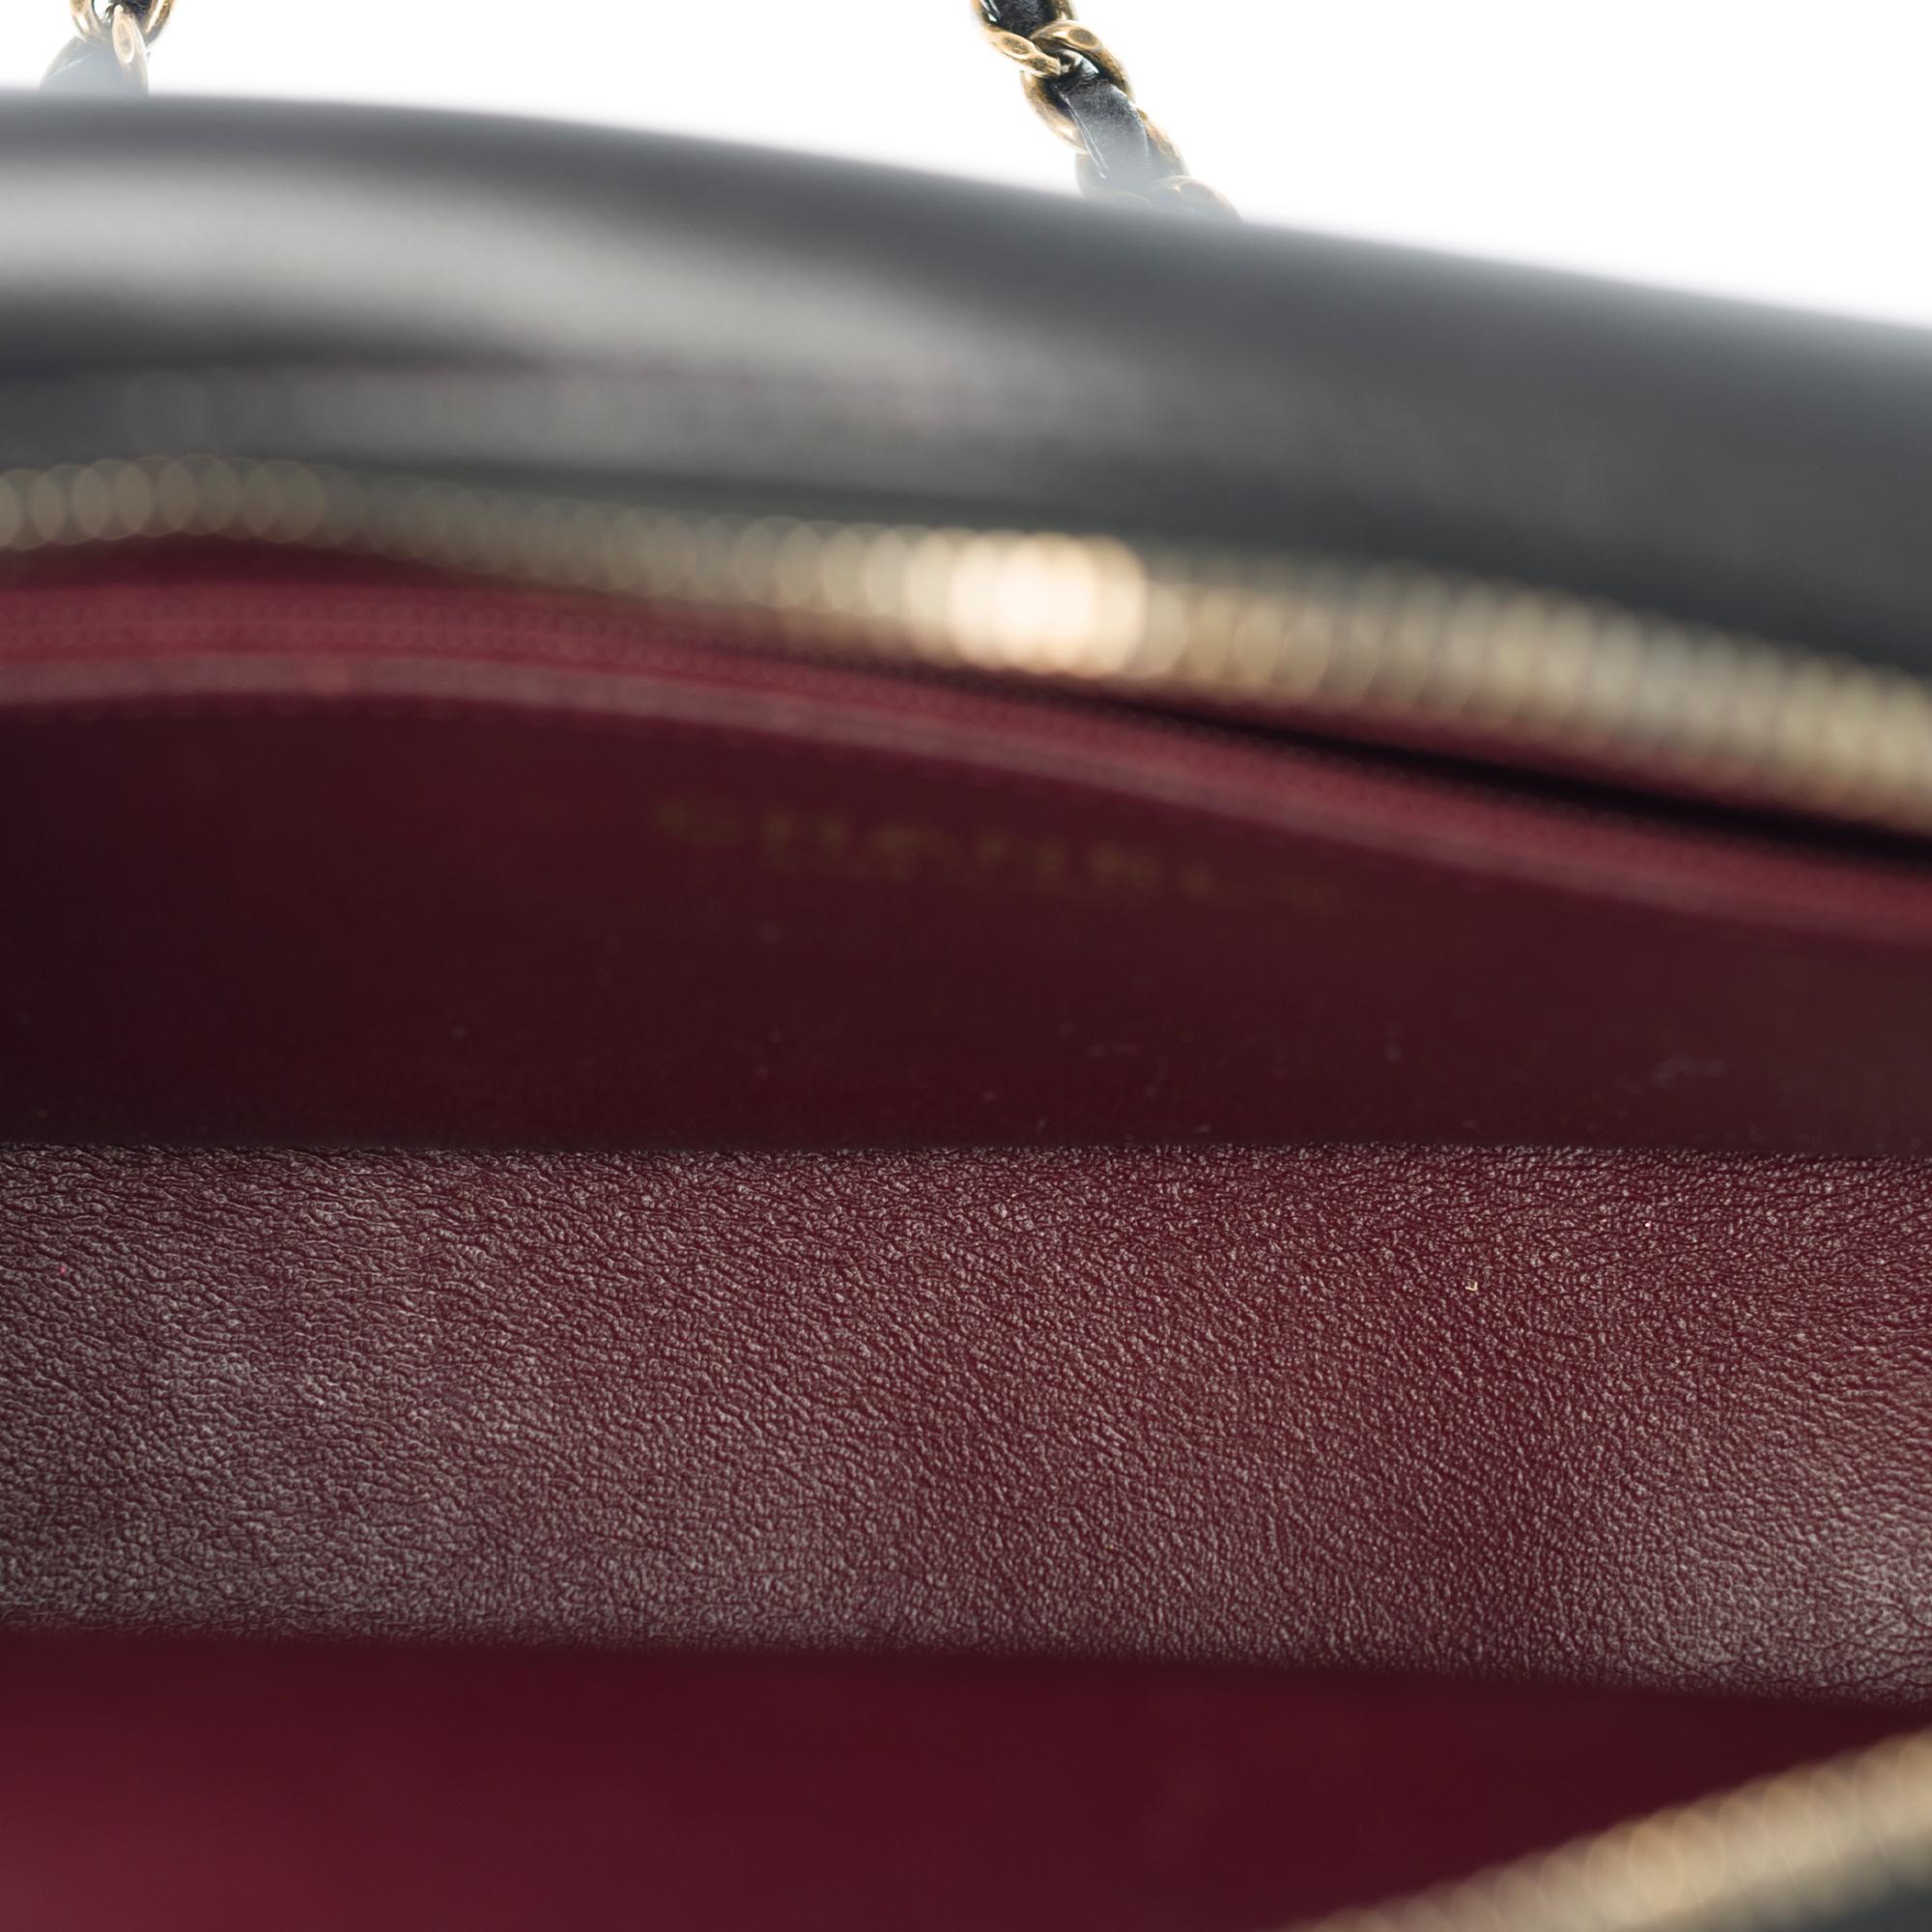 Amazing Chanel Camera shoulder bag in black herringbone leather, GHW 1